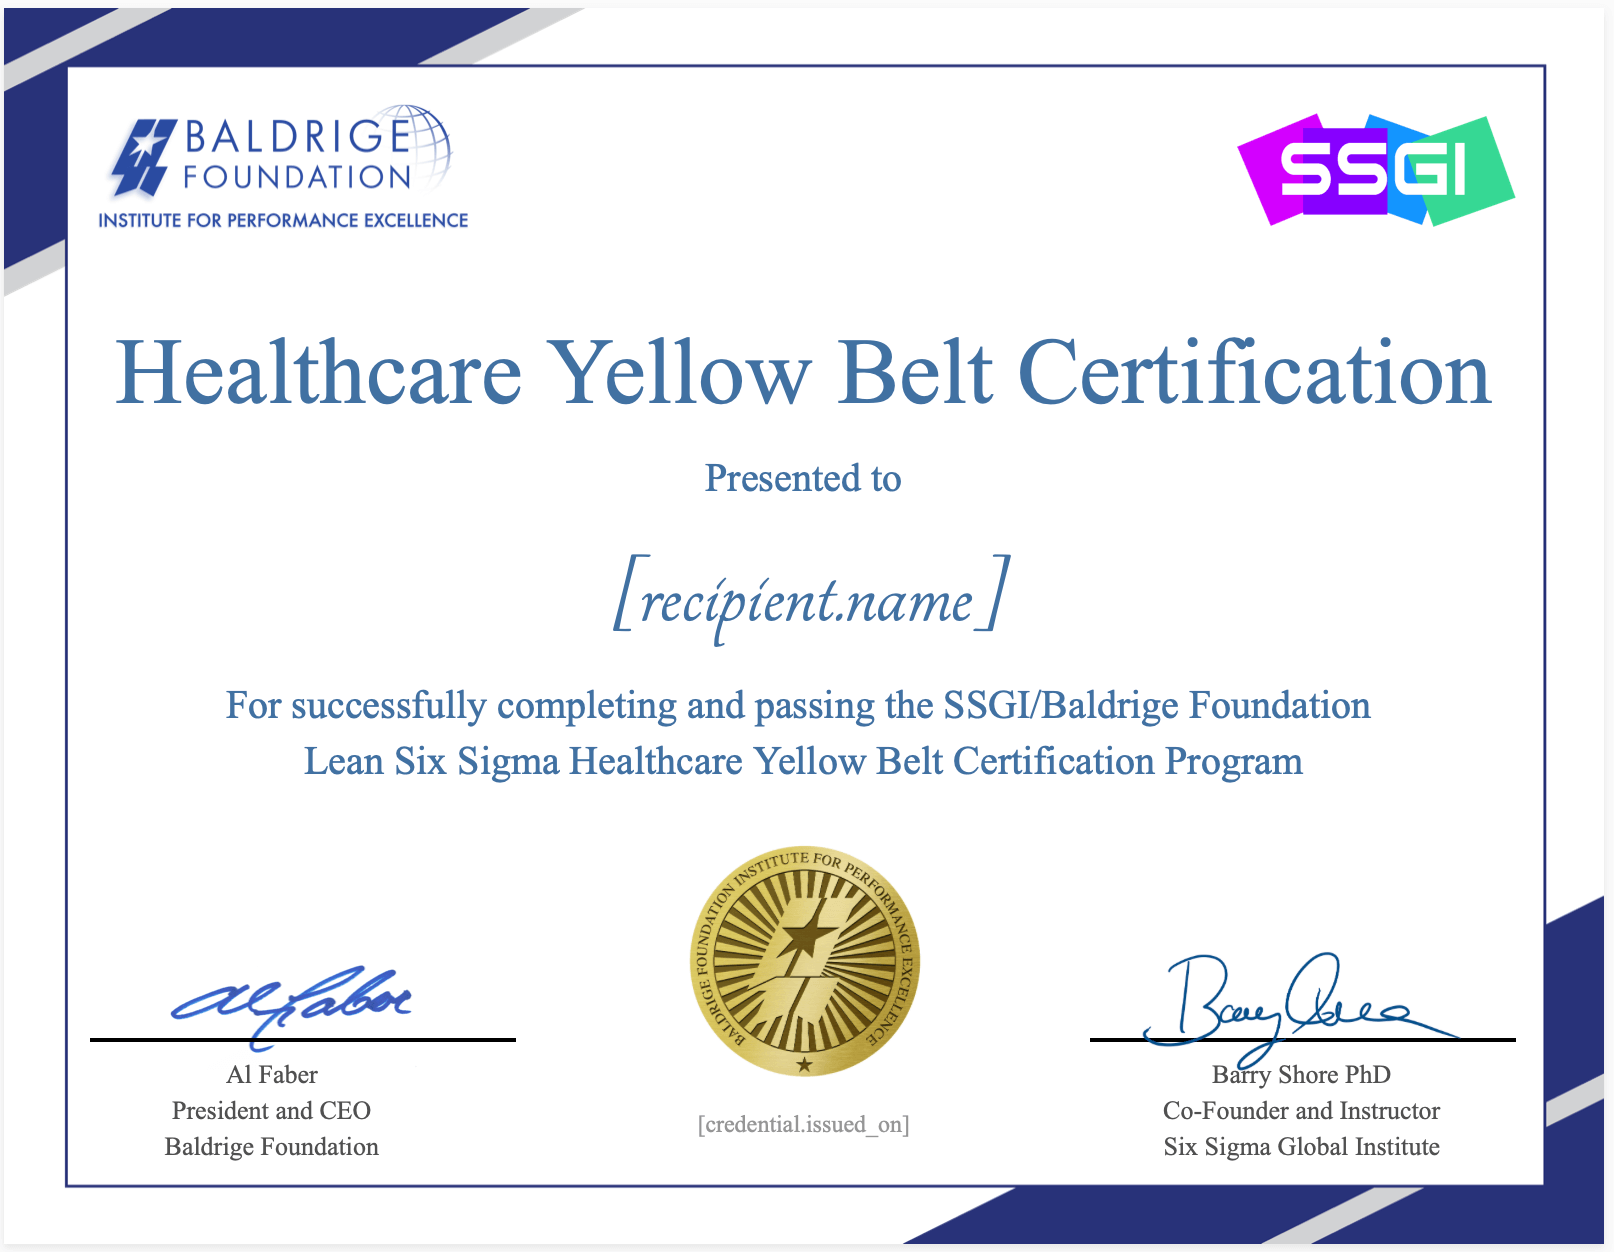 baldrige healthcare yellow belt